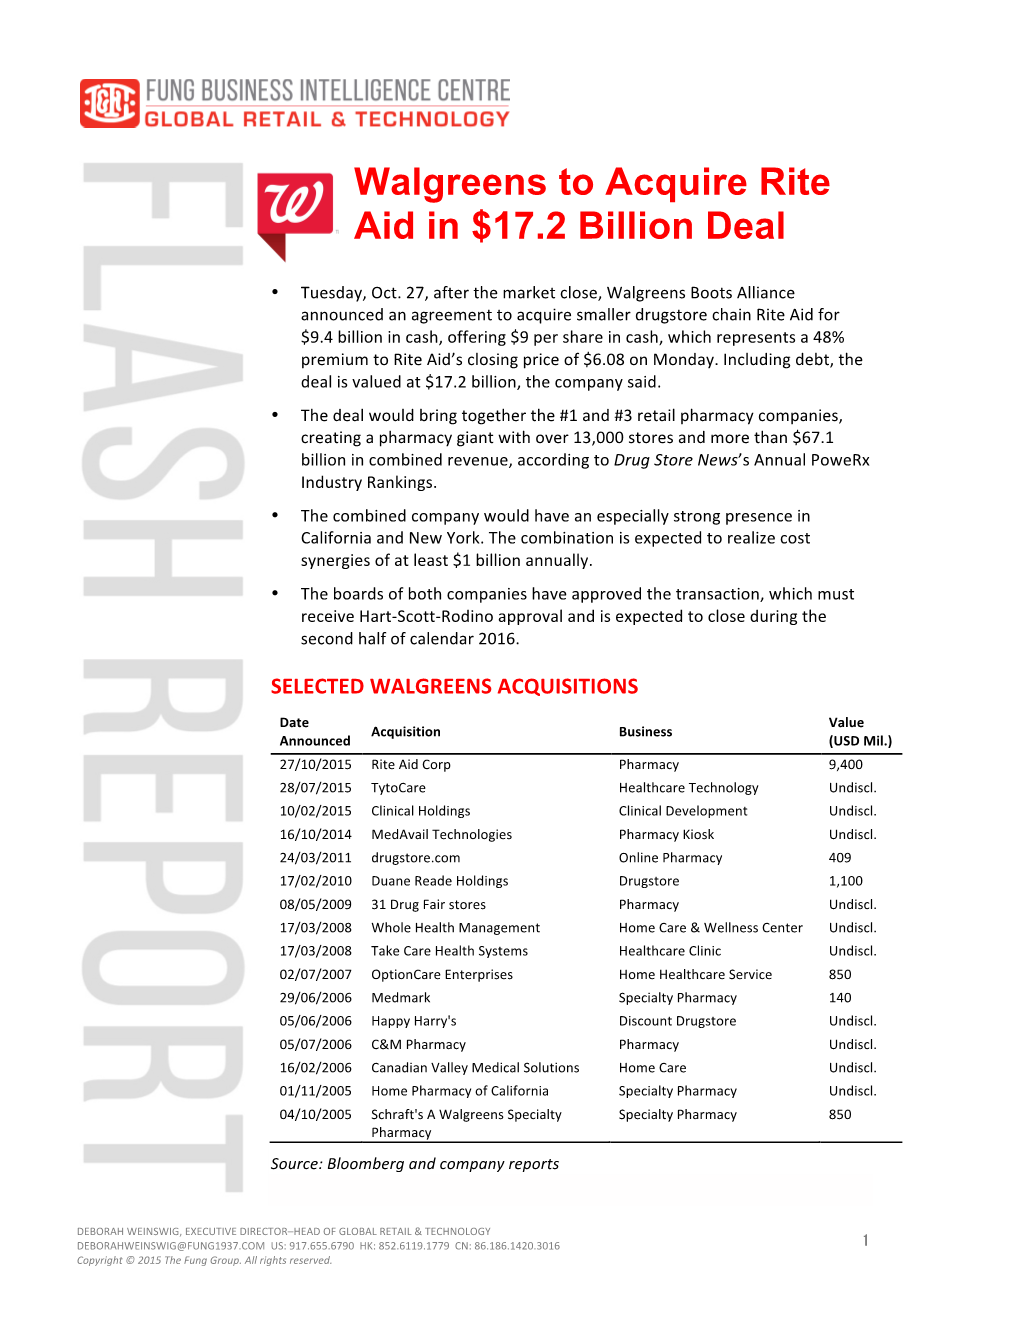 Walgreens to Acquire Rite Aid in $17.2 Billion Deal